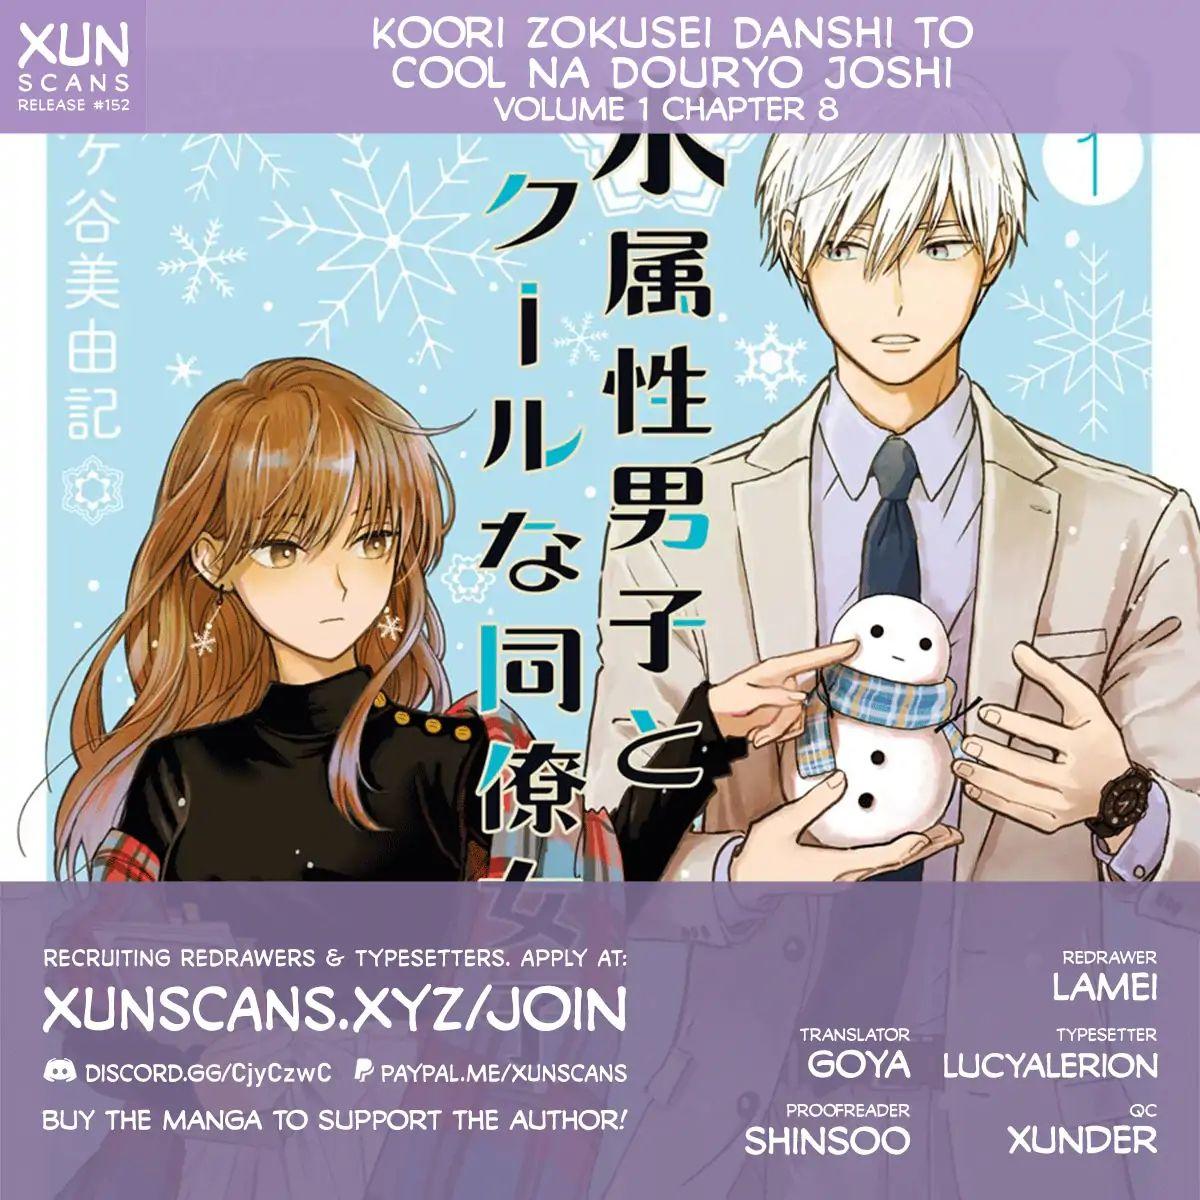 Ice guy and the cool female colleague. Koori Zokusei Danshi to cool na douryo Joshi Фуюцуки. Anime baru : Koori Zokusei Danshi to cool na Douryou.